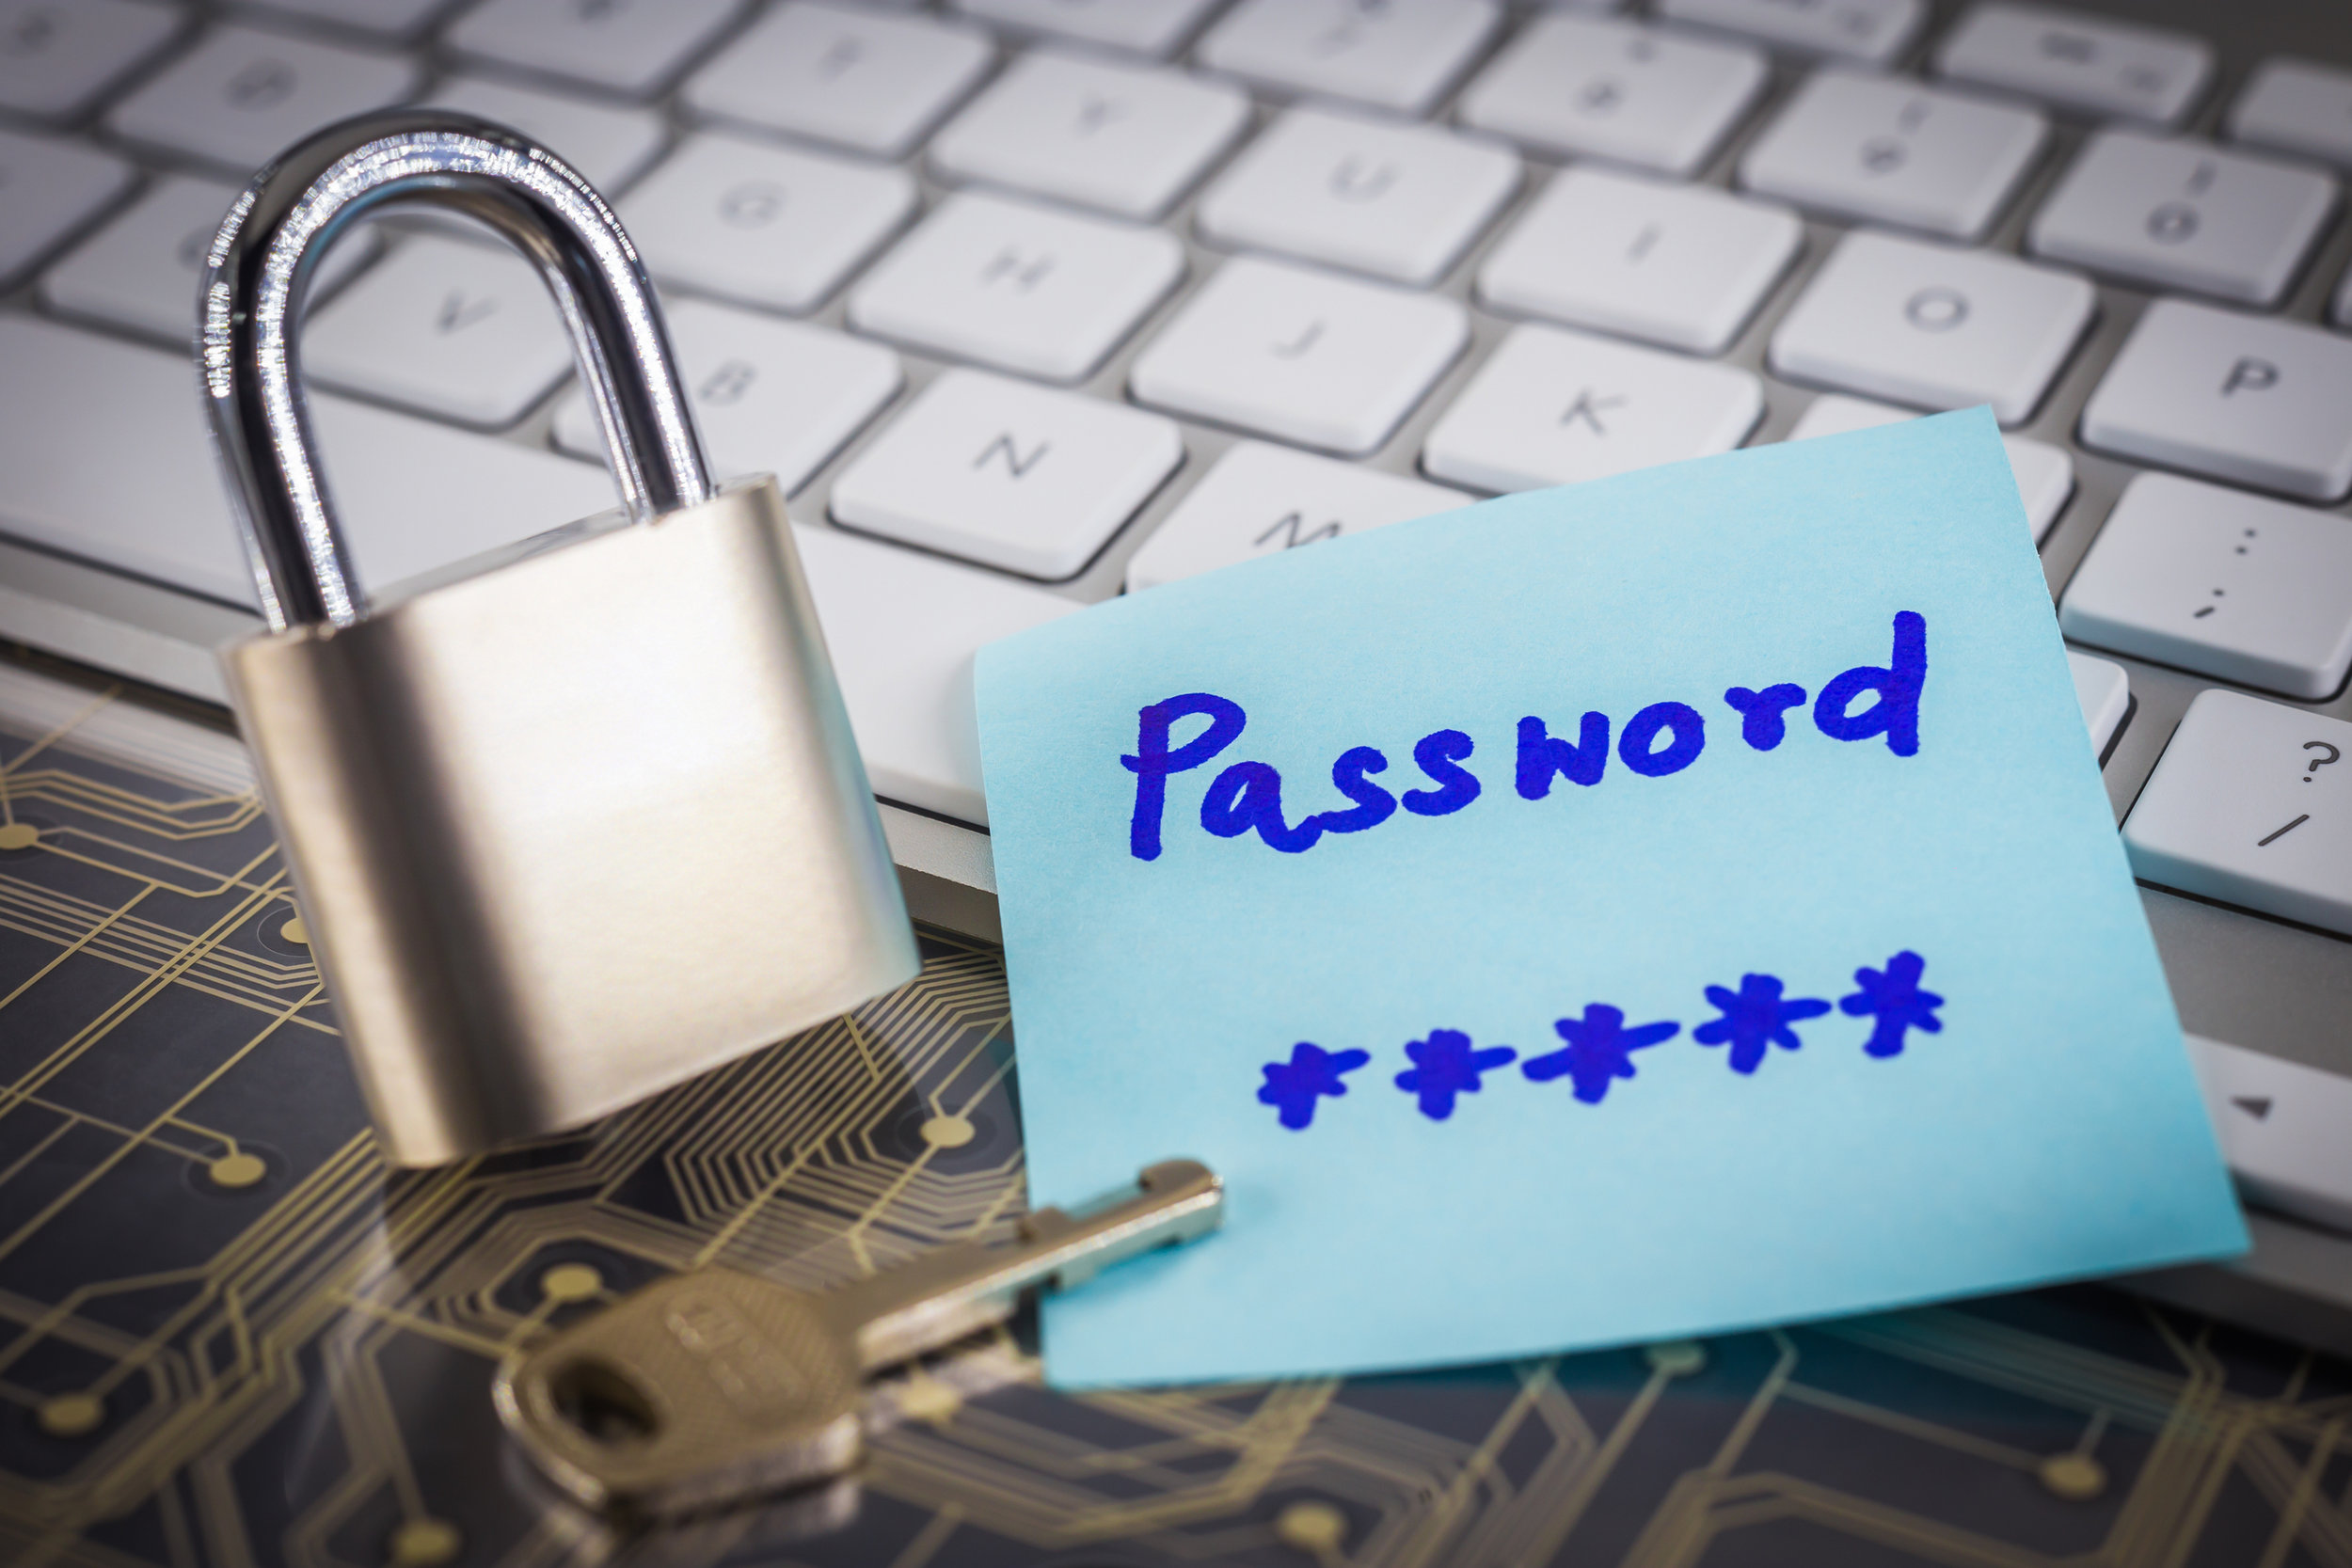 printing passwordsafe passwords